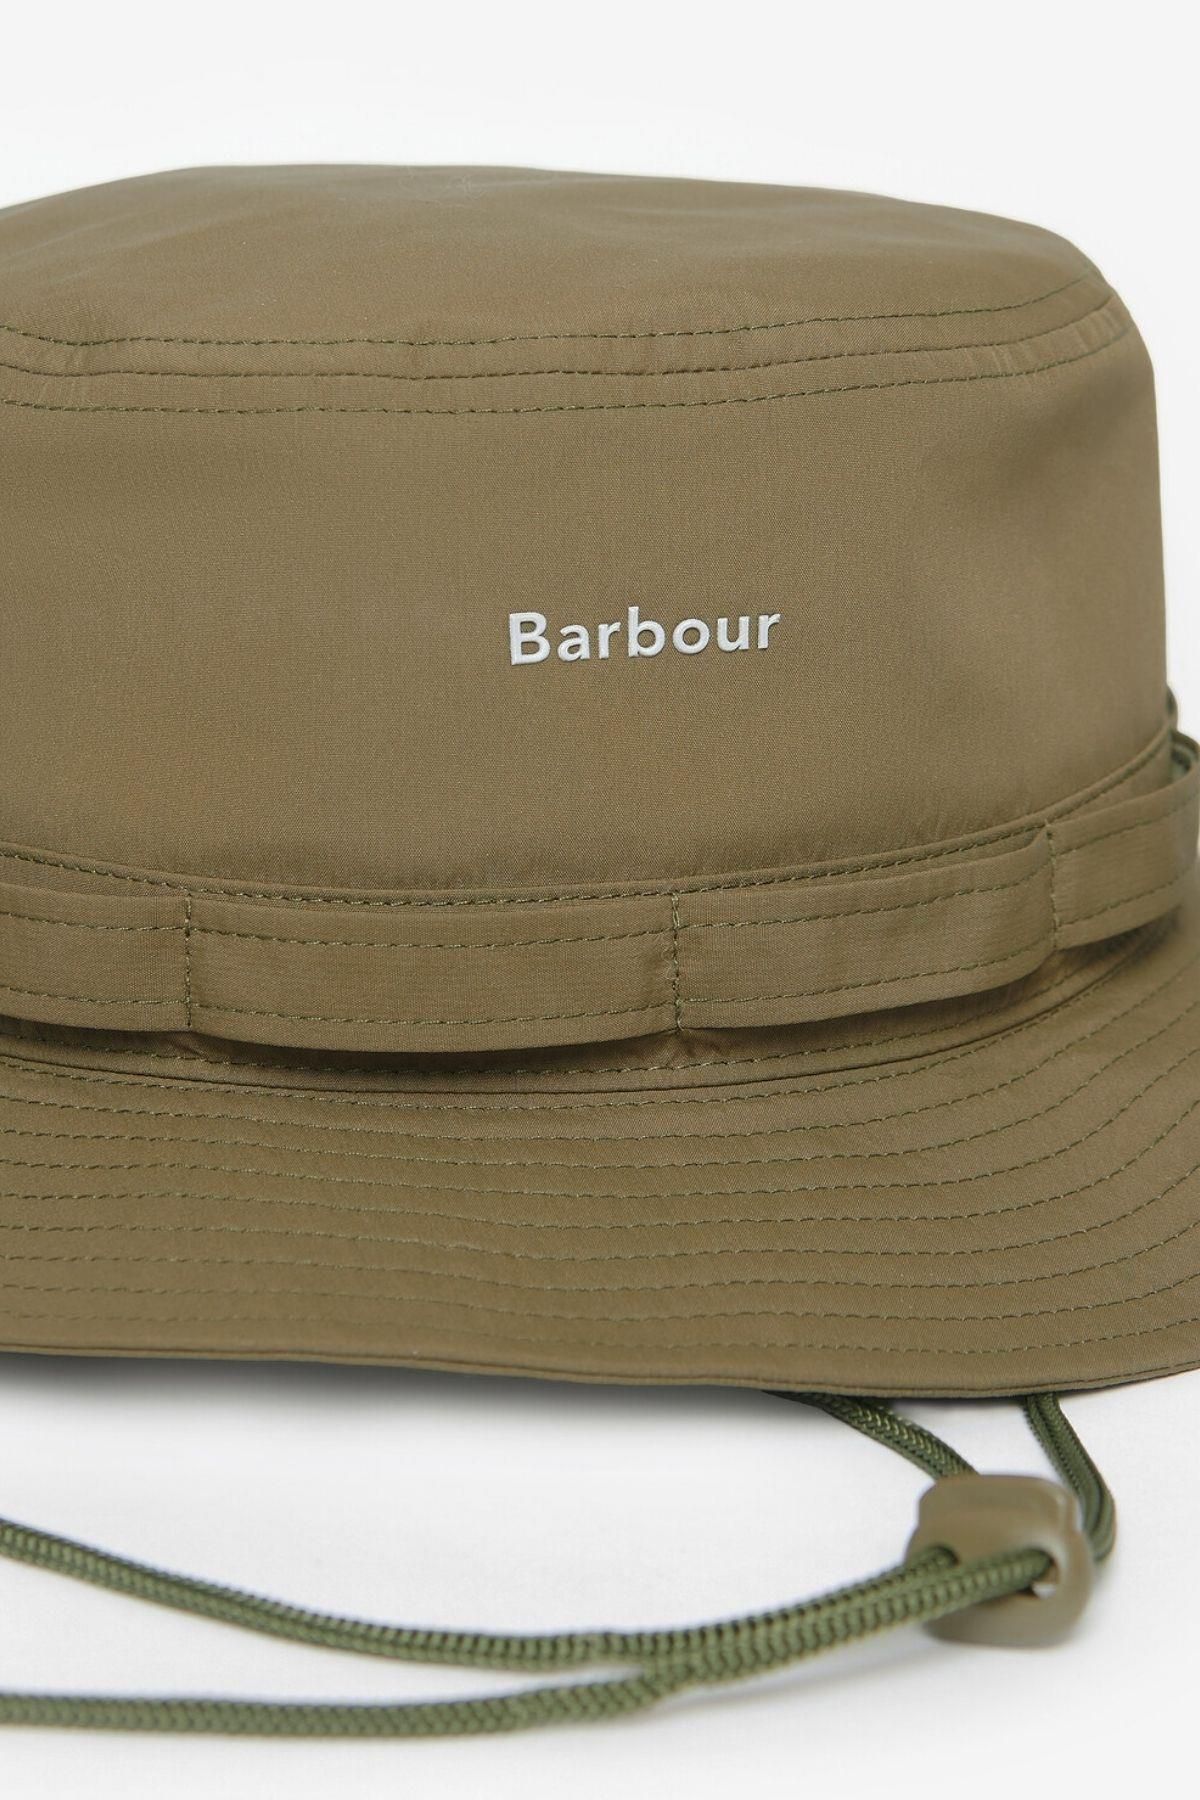 Barbour Teesdale Hatup Bucket Hat Ol51 Army Green